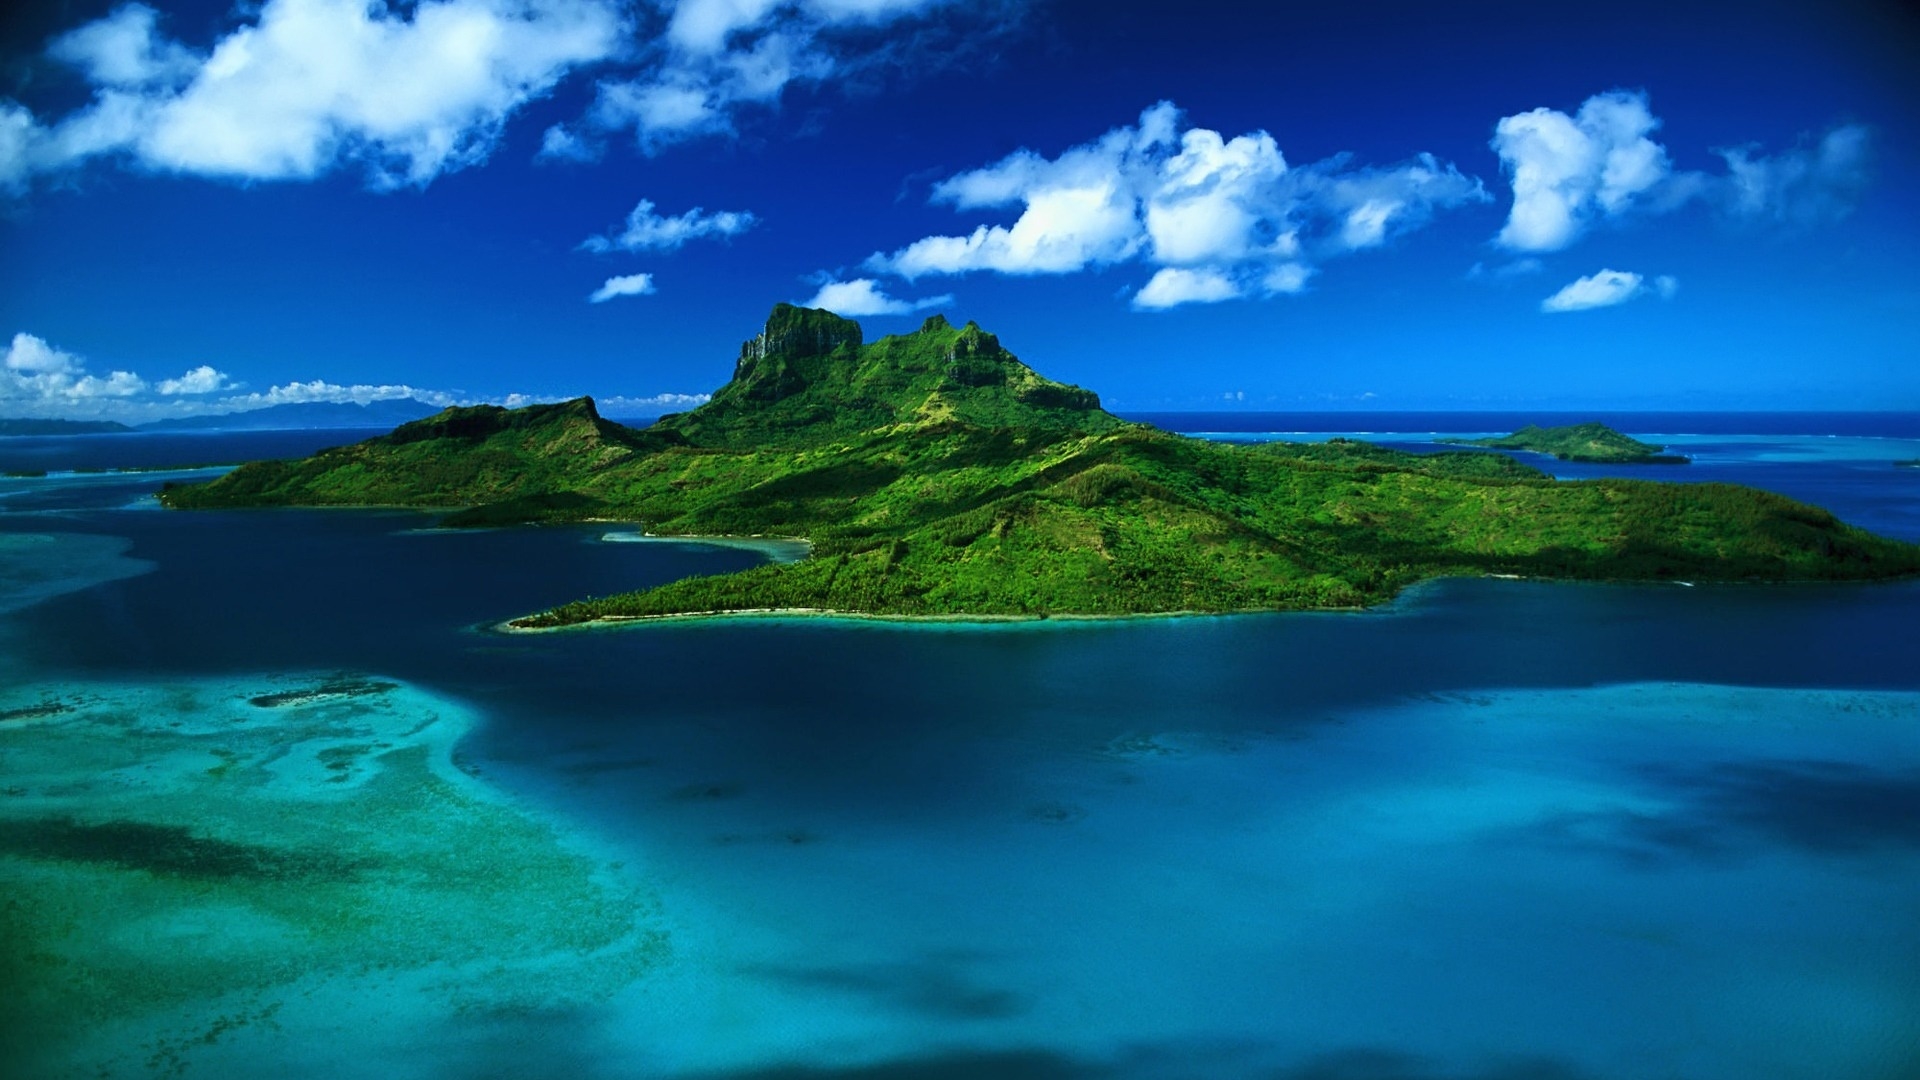 Mauritius Island for 1920 x 1080 HDTV 1080p resolution